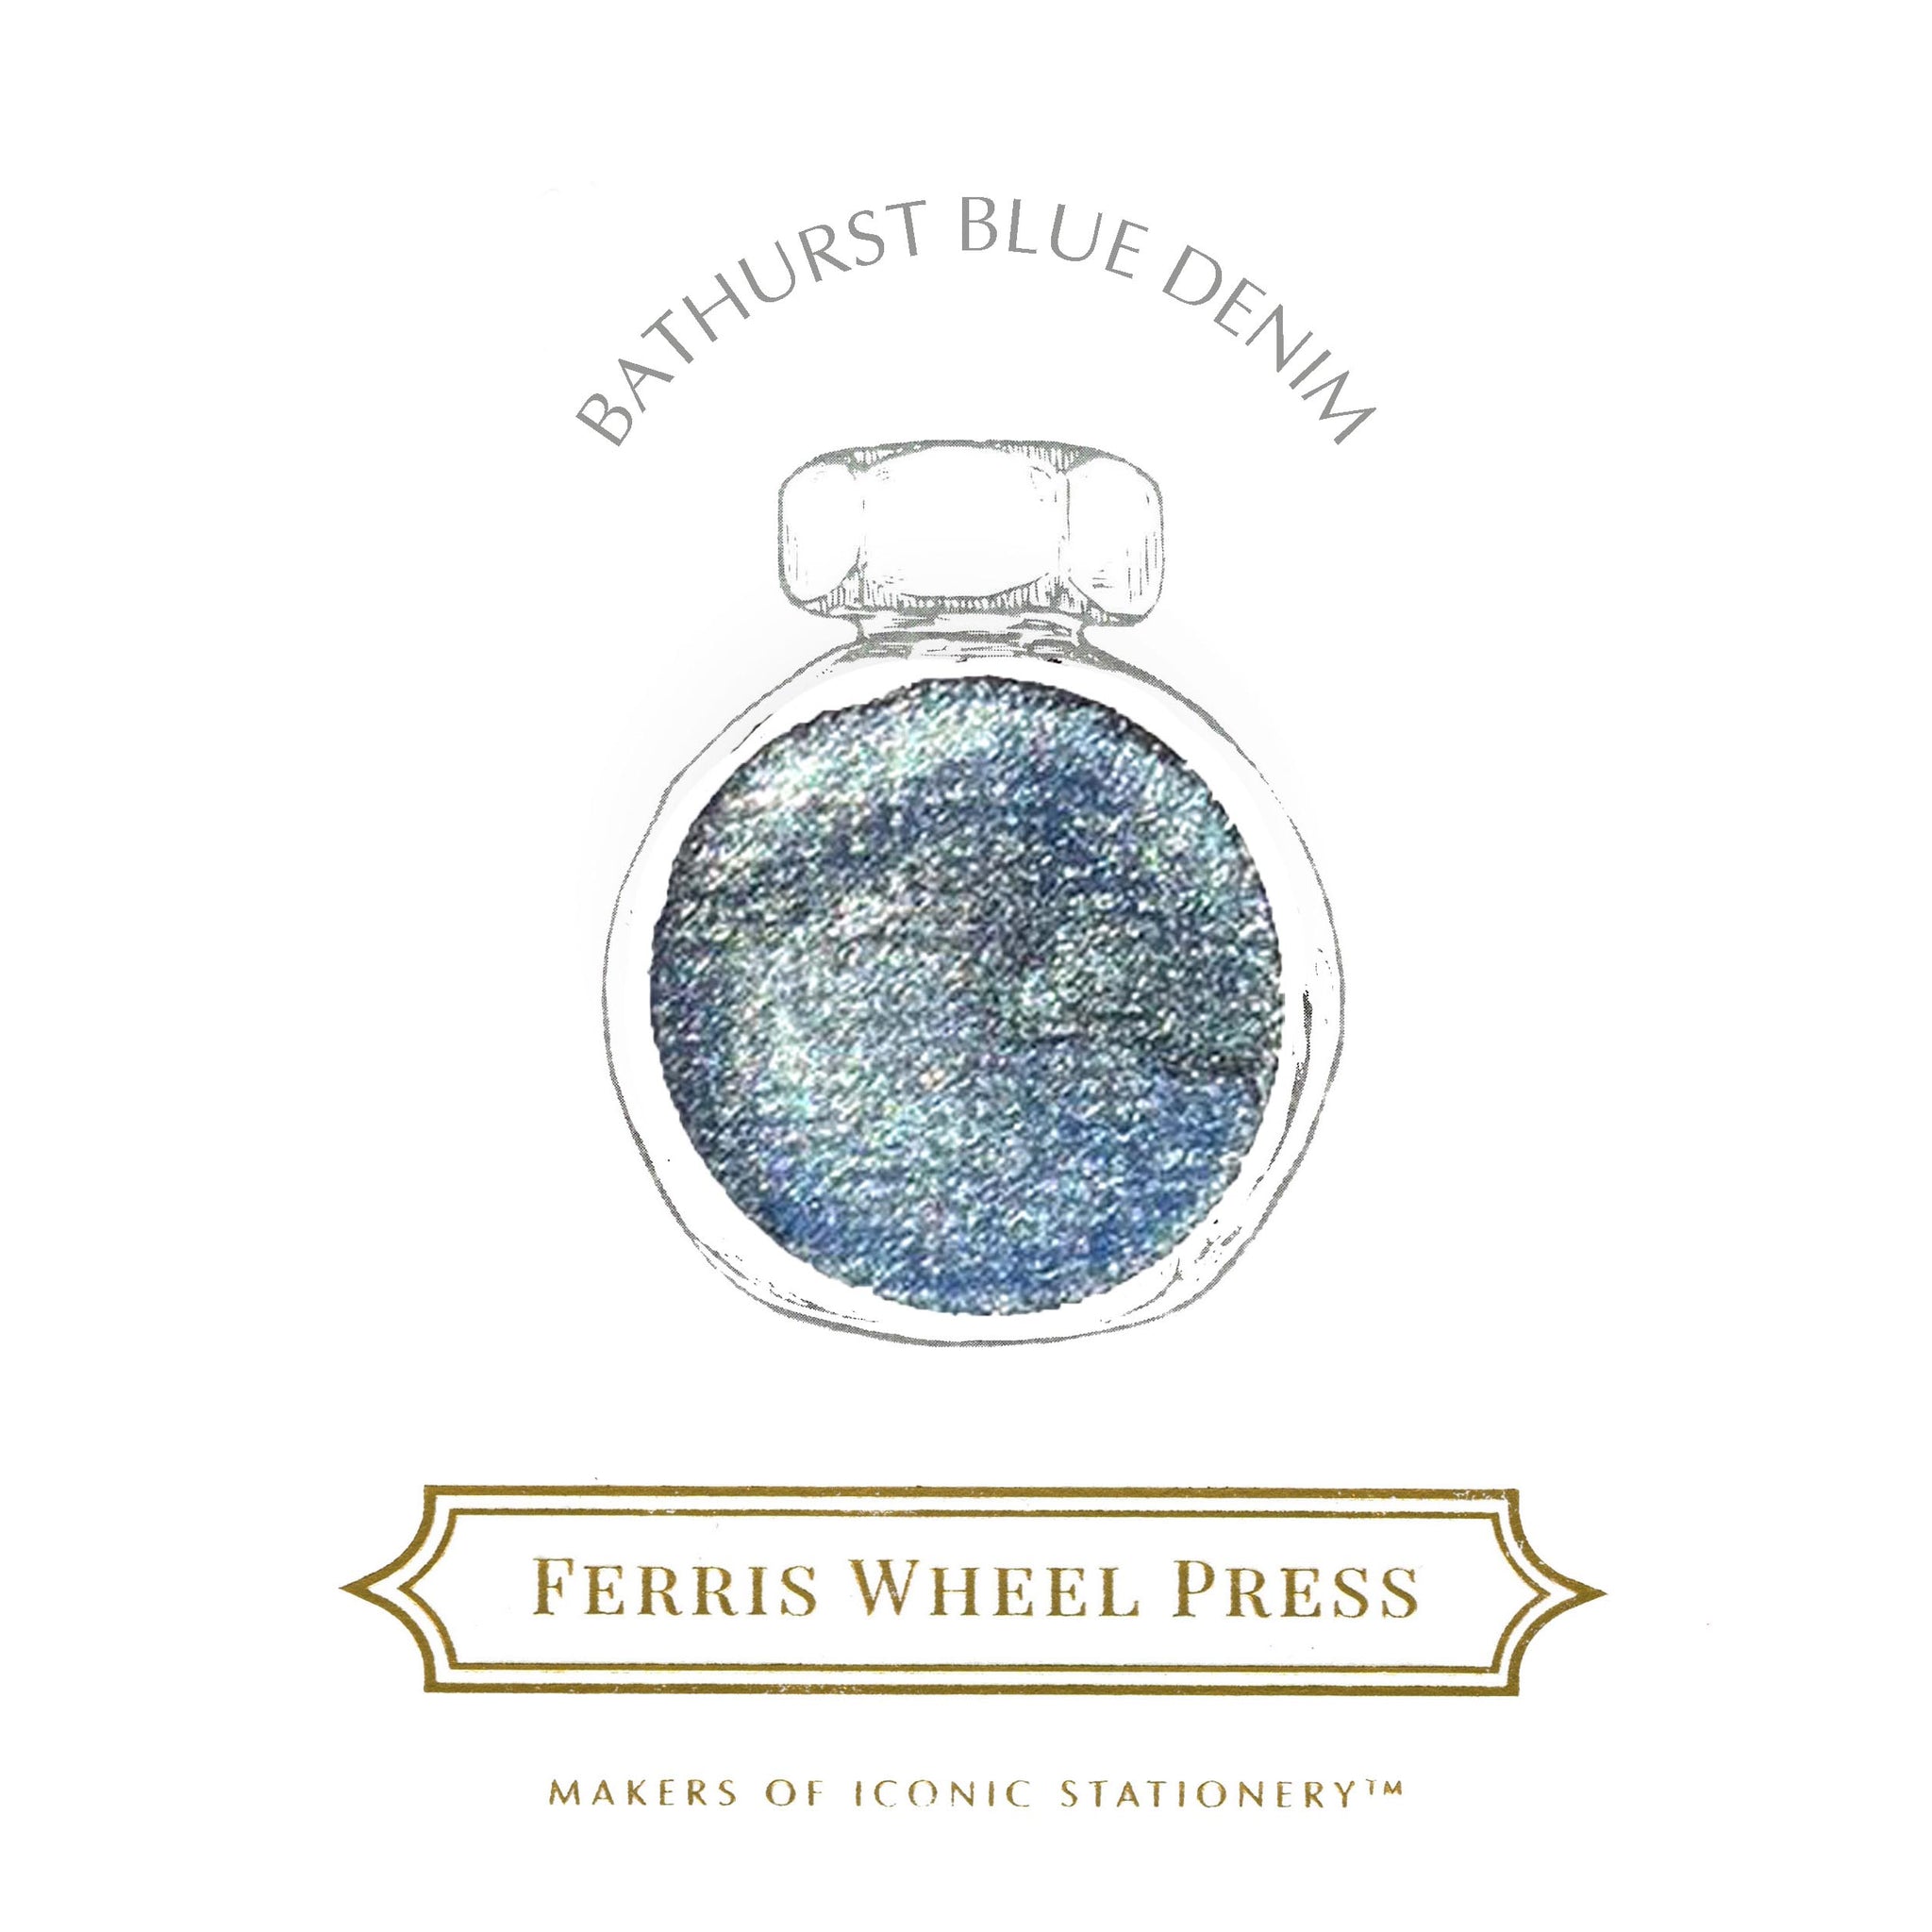 Ferris Wheel Press | Bathurst Blue Denim 38ml